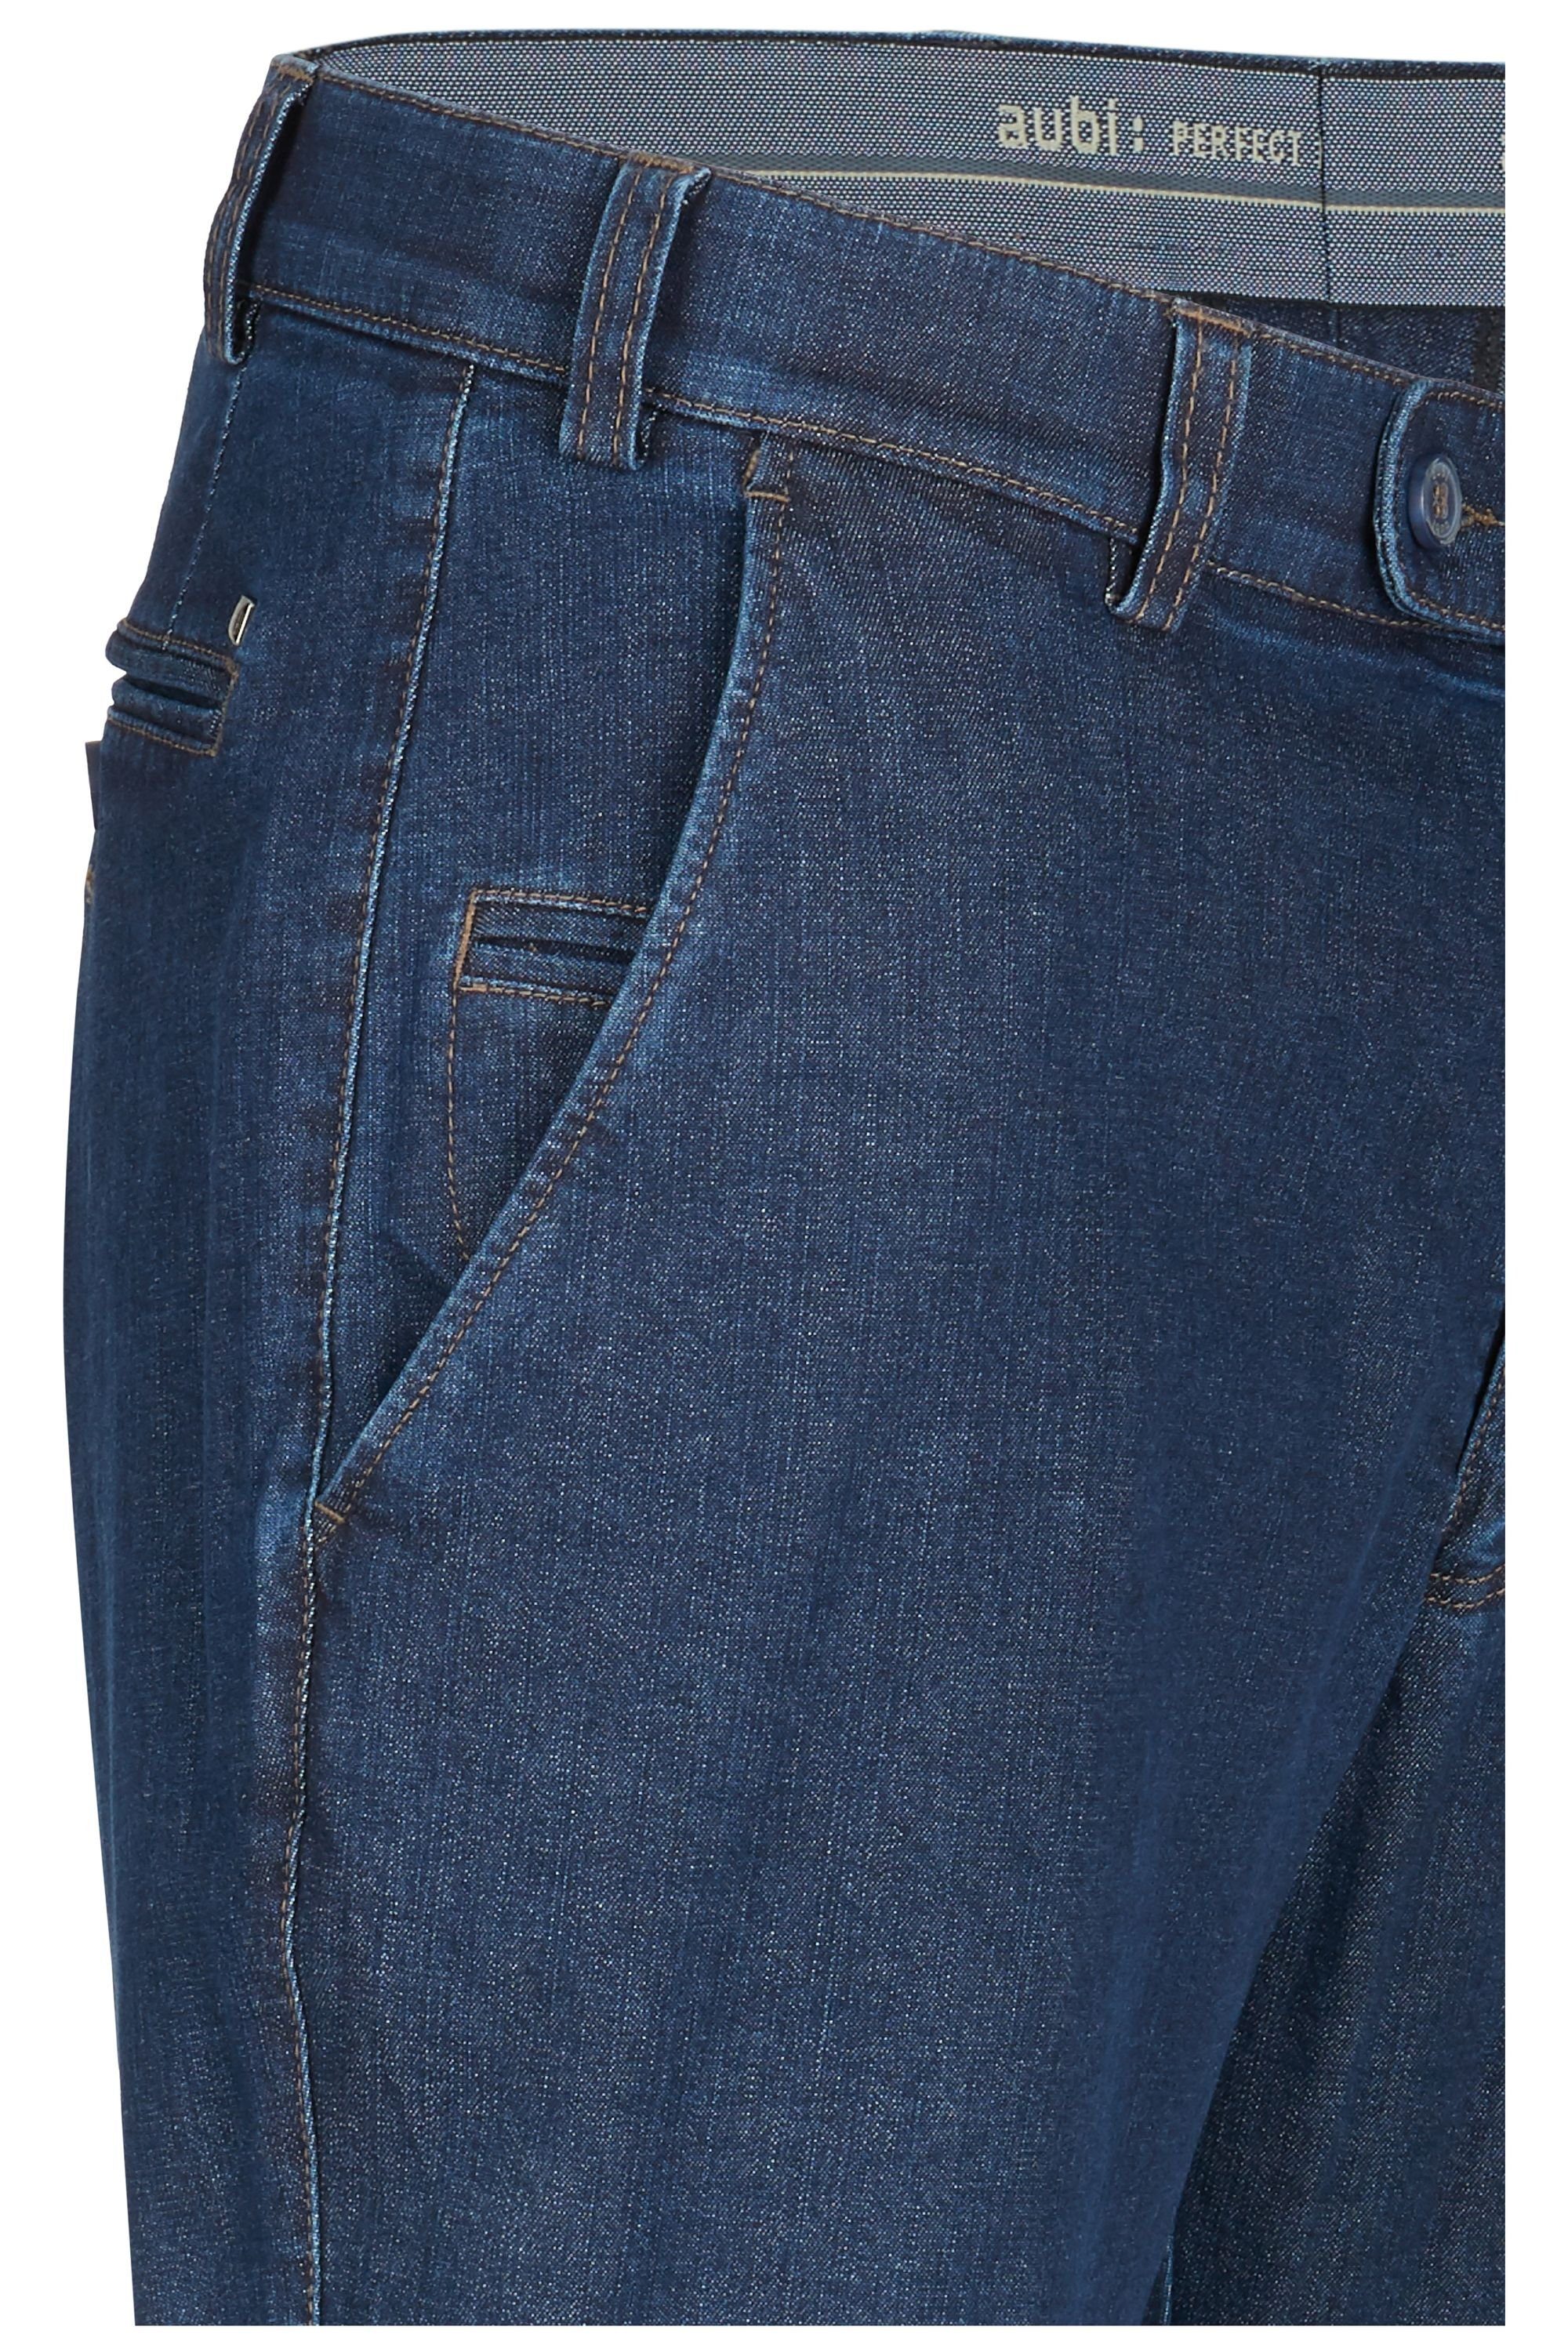 Perfect Stretch stone Jeans Modell Bequeme Jeans aubi (46) aubi: Fit Hose Herren 529